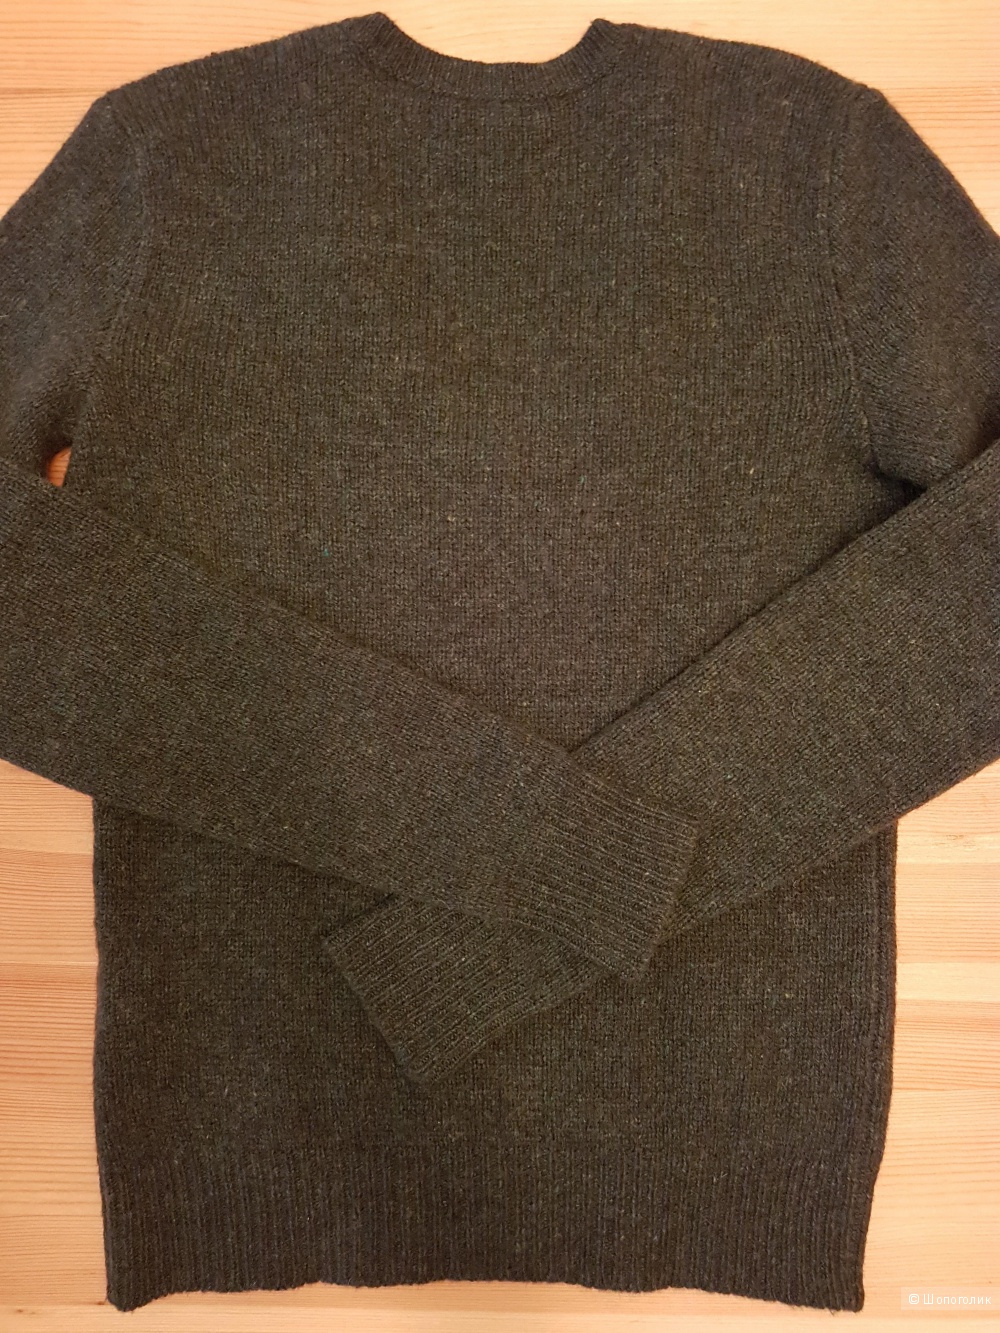 Пуловер Ralph Lauren XS-S